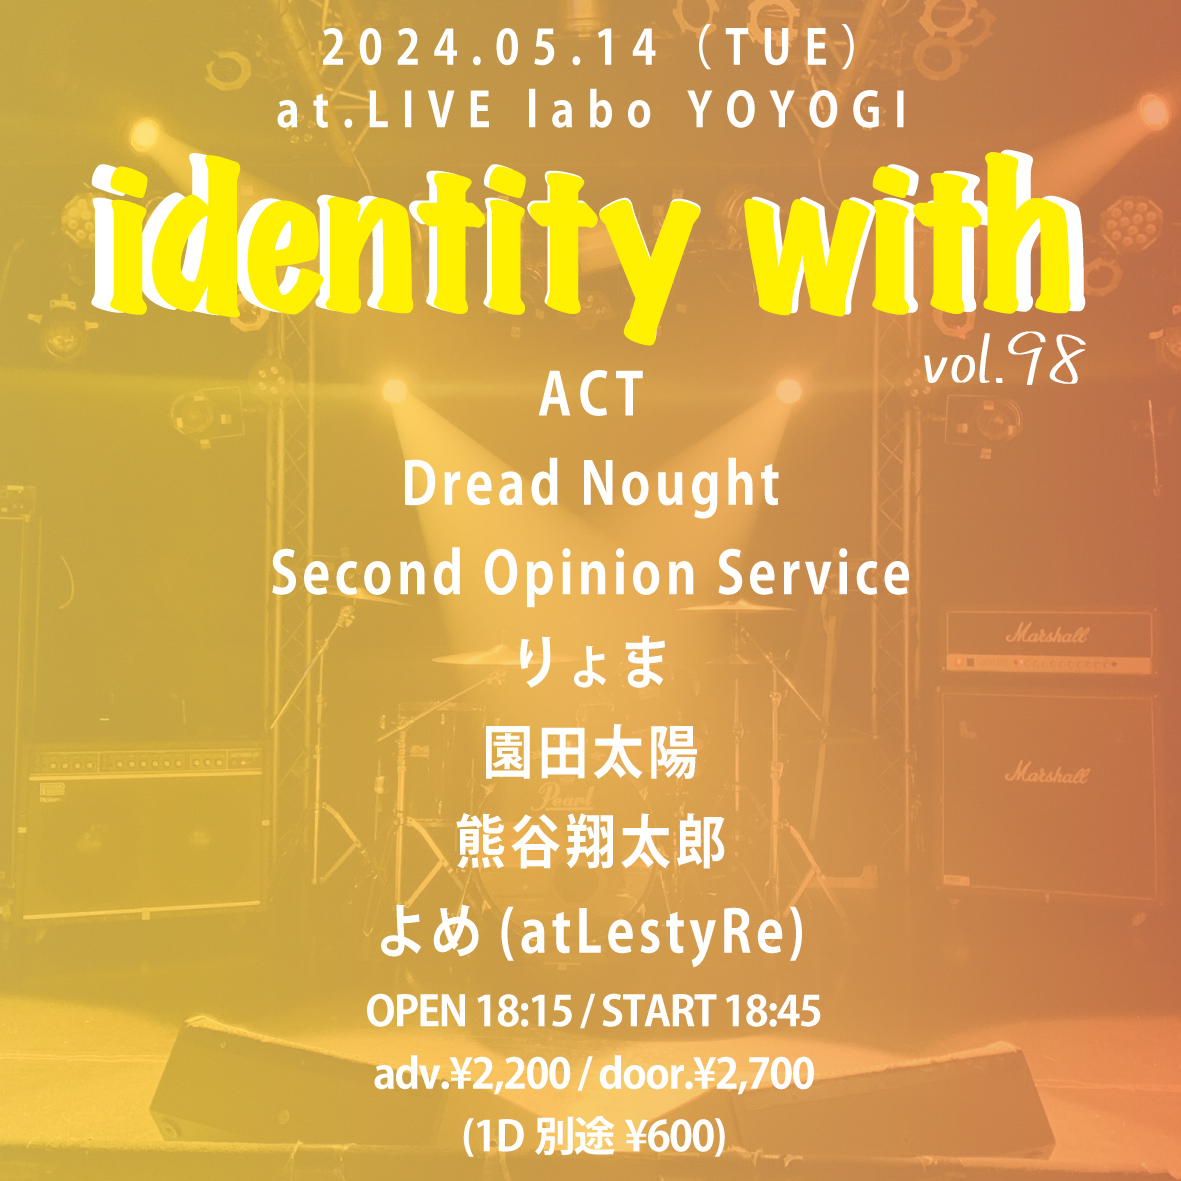 identity with vol.98